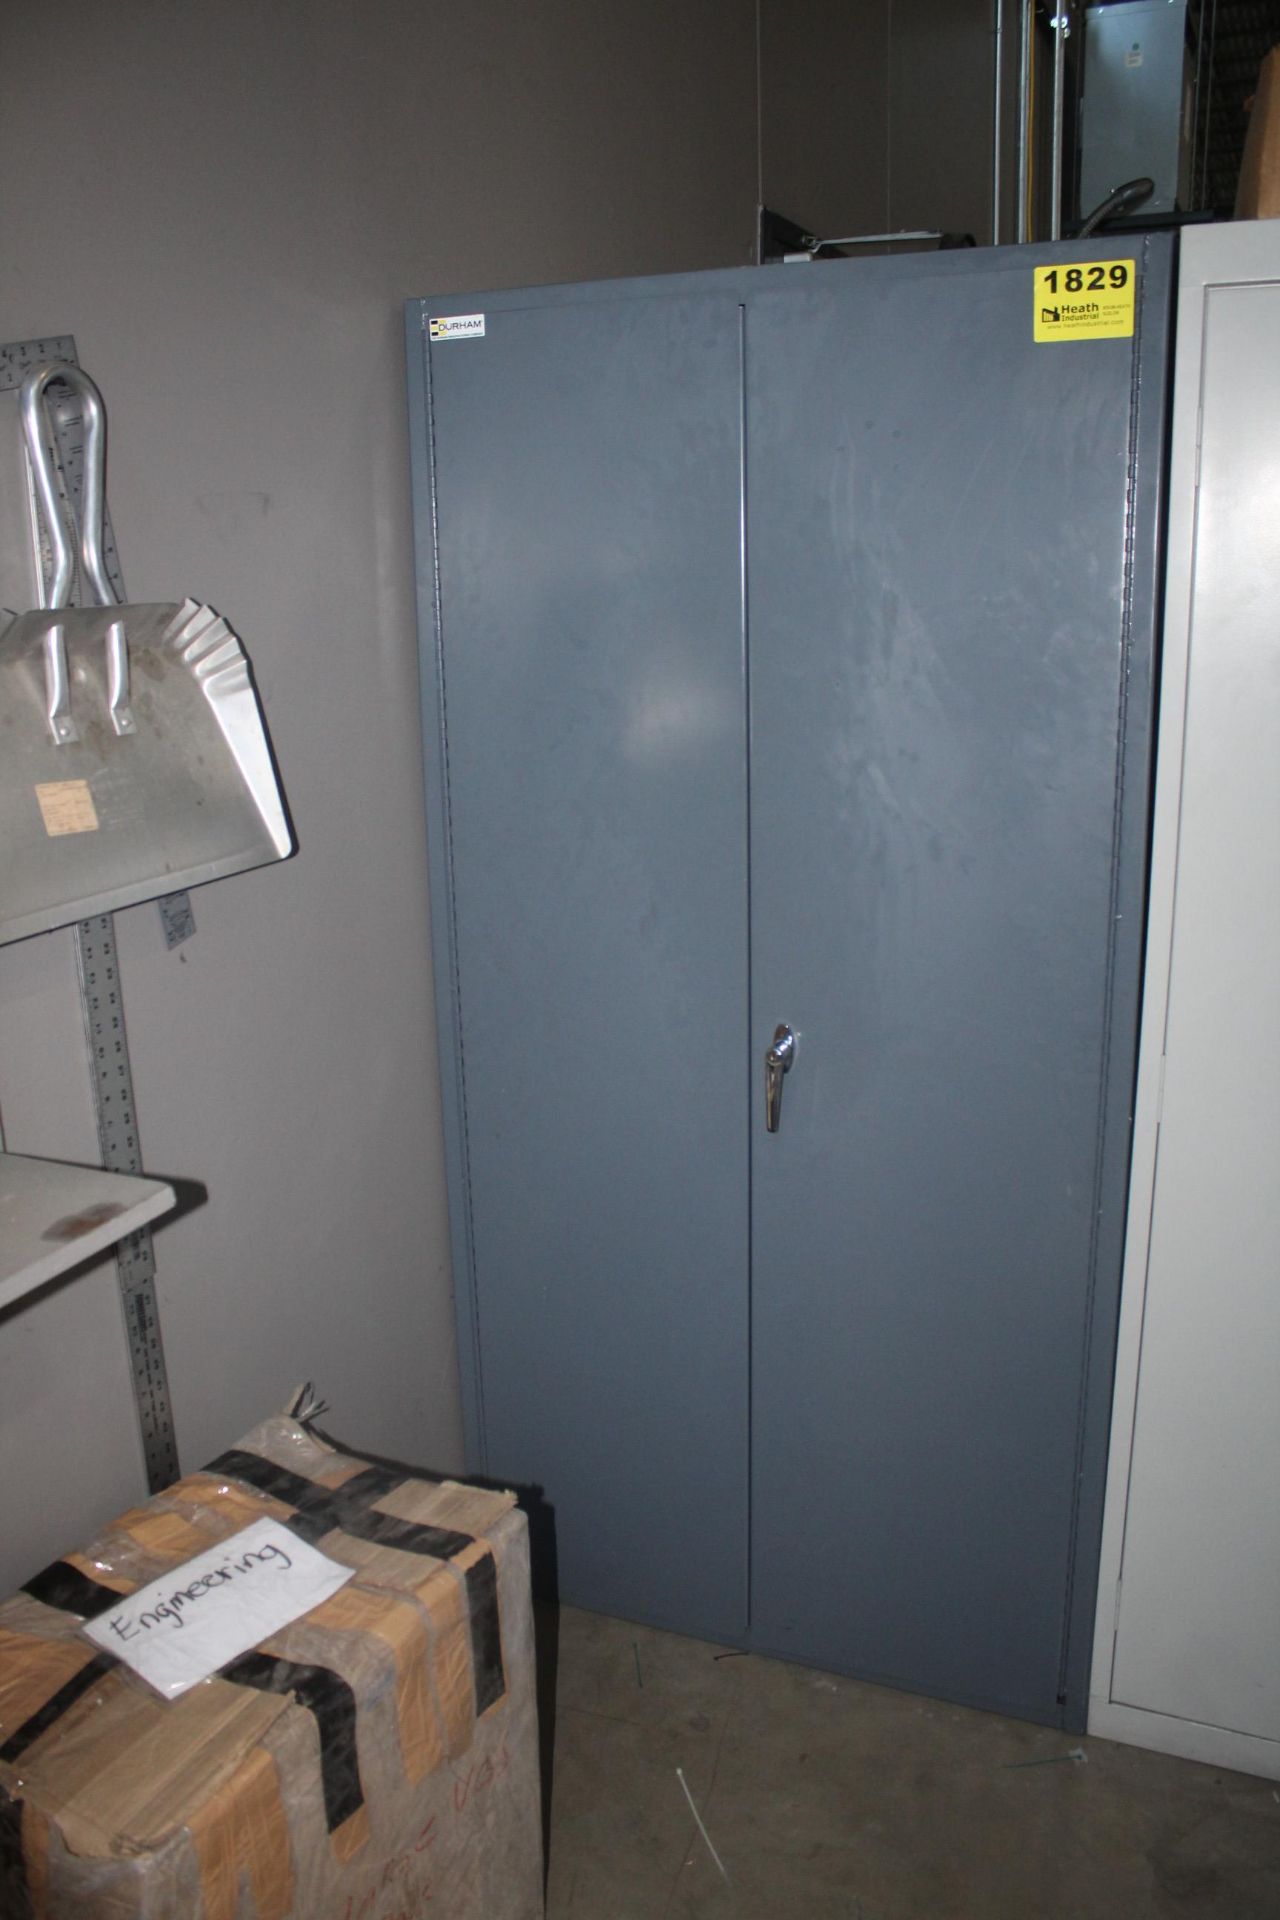 DURHAM TWO DOOR STEEL STORAGE CABINET, 36" X 18" X 72" WITH BINS & ASSORTED PARTS / SUPPLIES